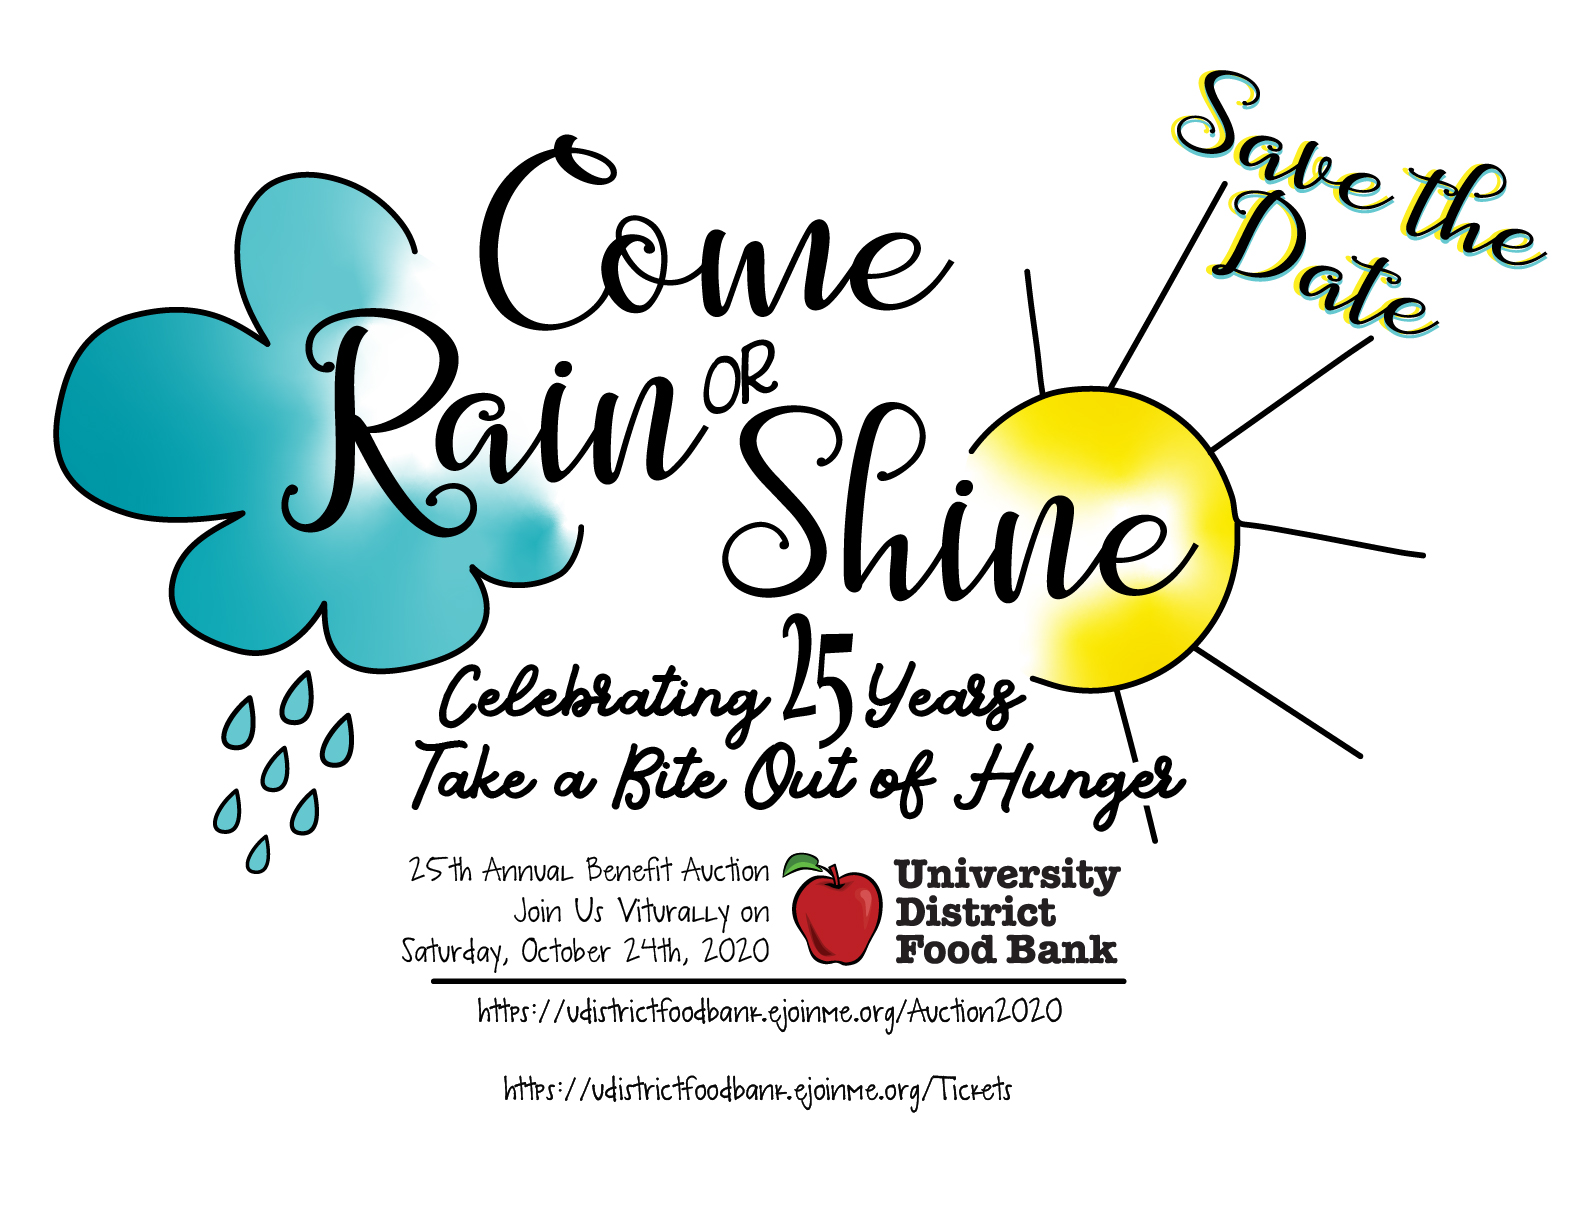 University District Food Bank - Auction 2020 - Come Rain or Shine